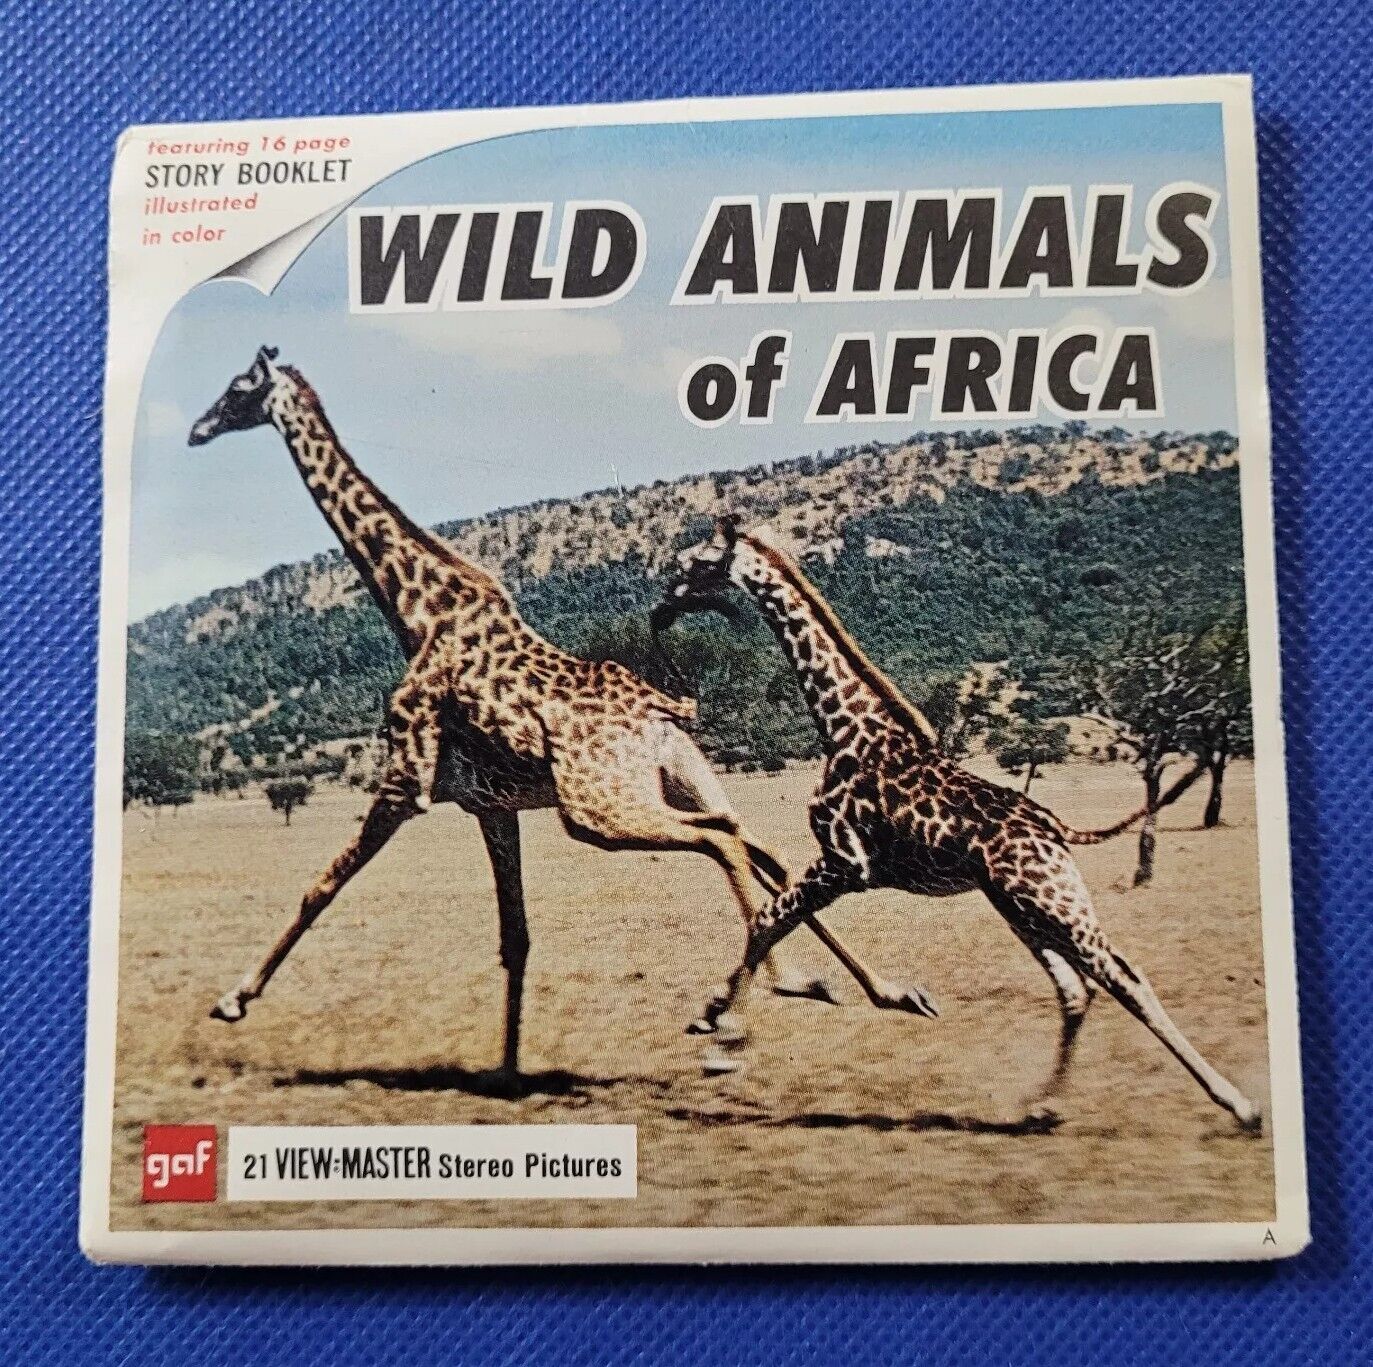 Vintage Gaf B618 Wild Animals of Africa Travel view-master 3 Reels Packet